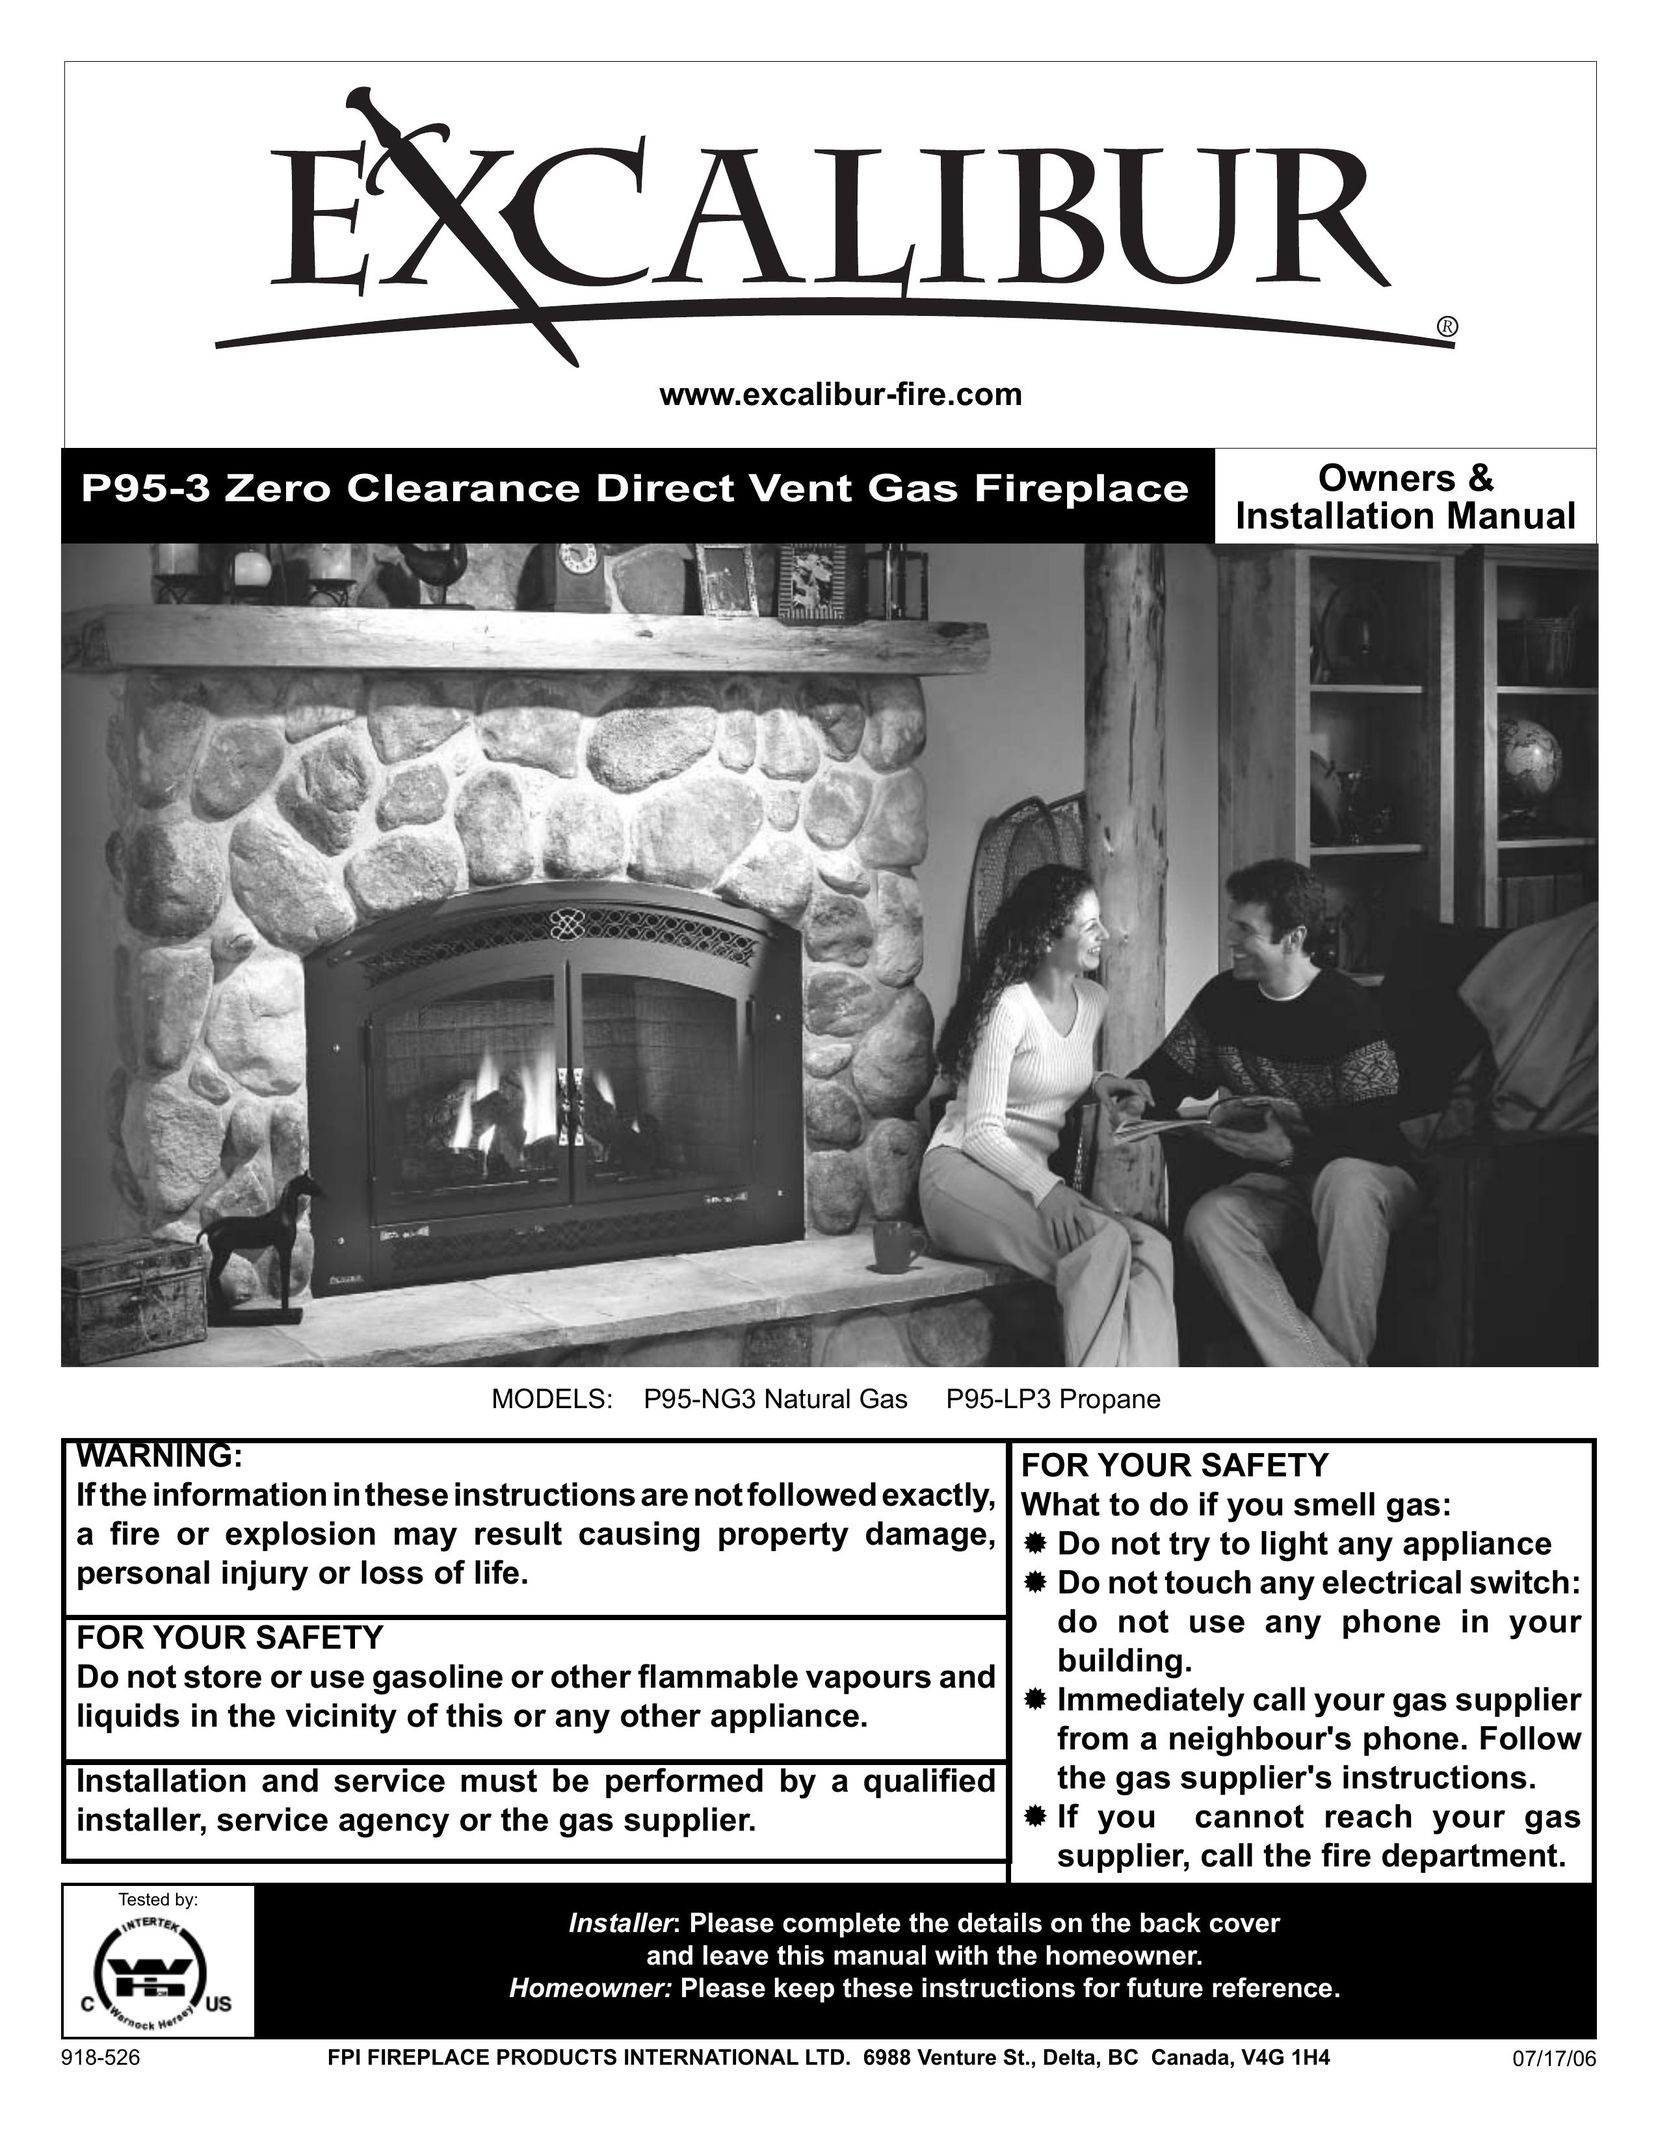 Excalibur electronic P95-NG3 Indoor Fireplace User Manual